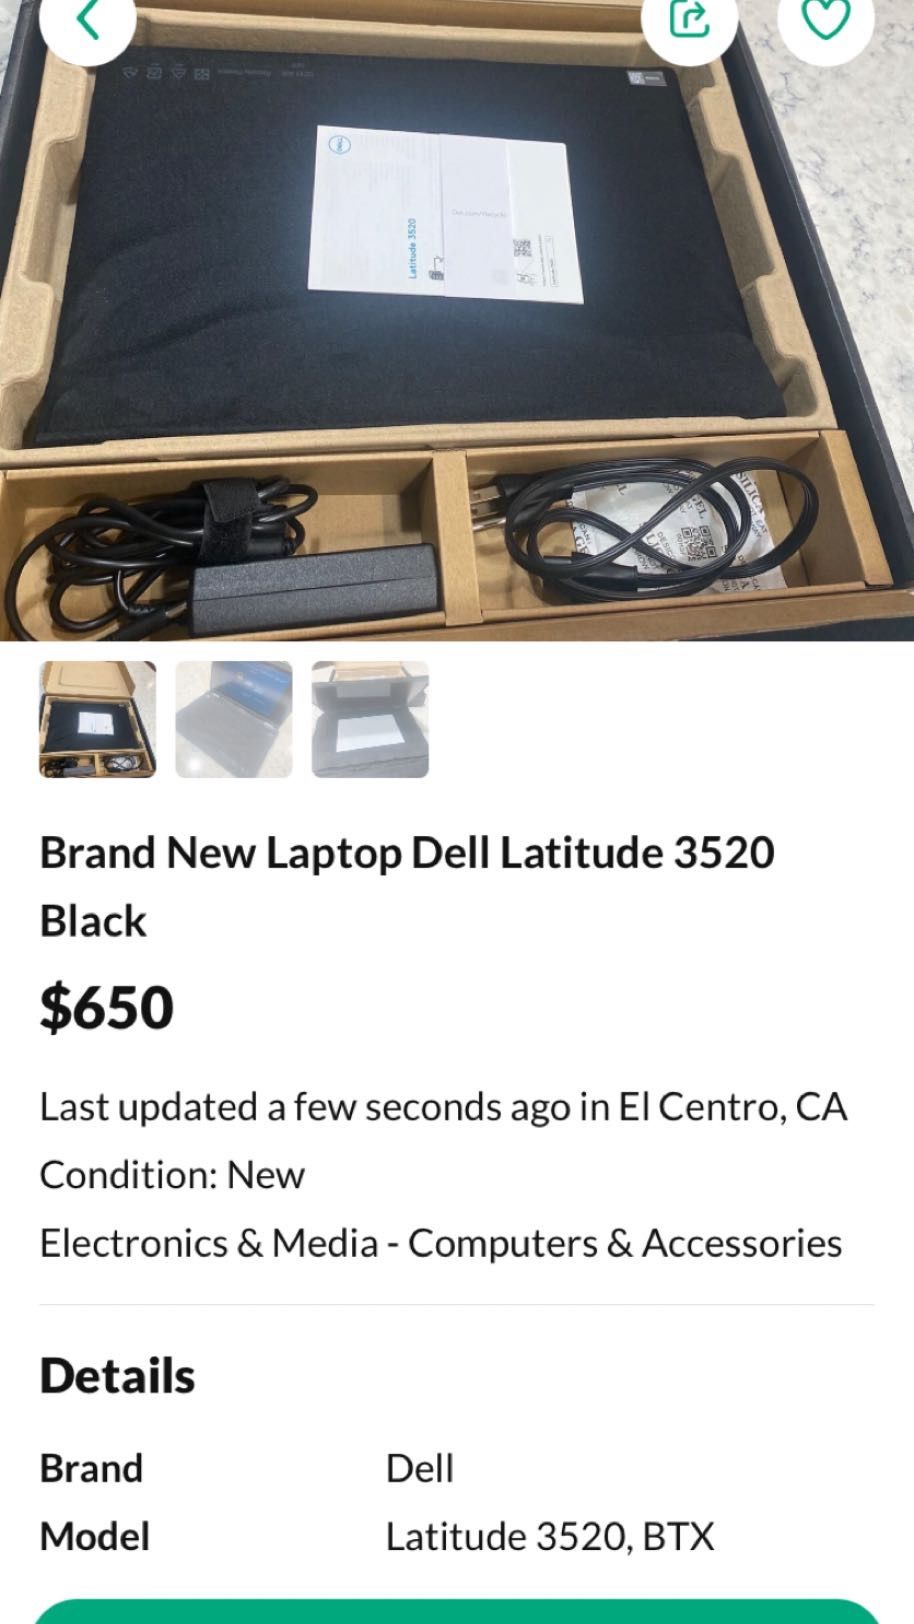 Brand New Laptop Dell Latitude 3520